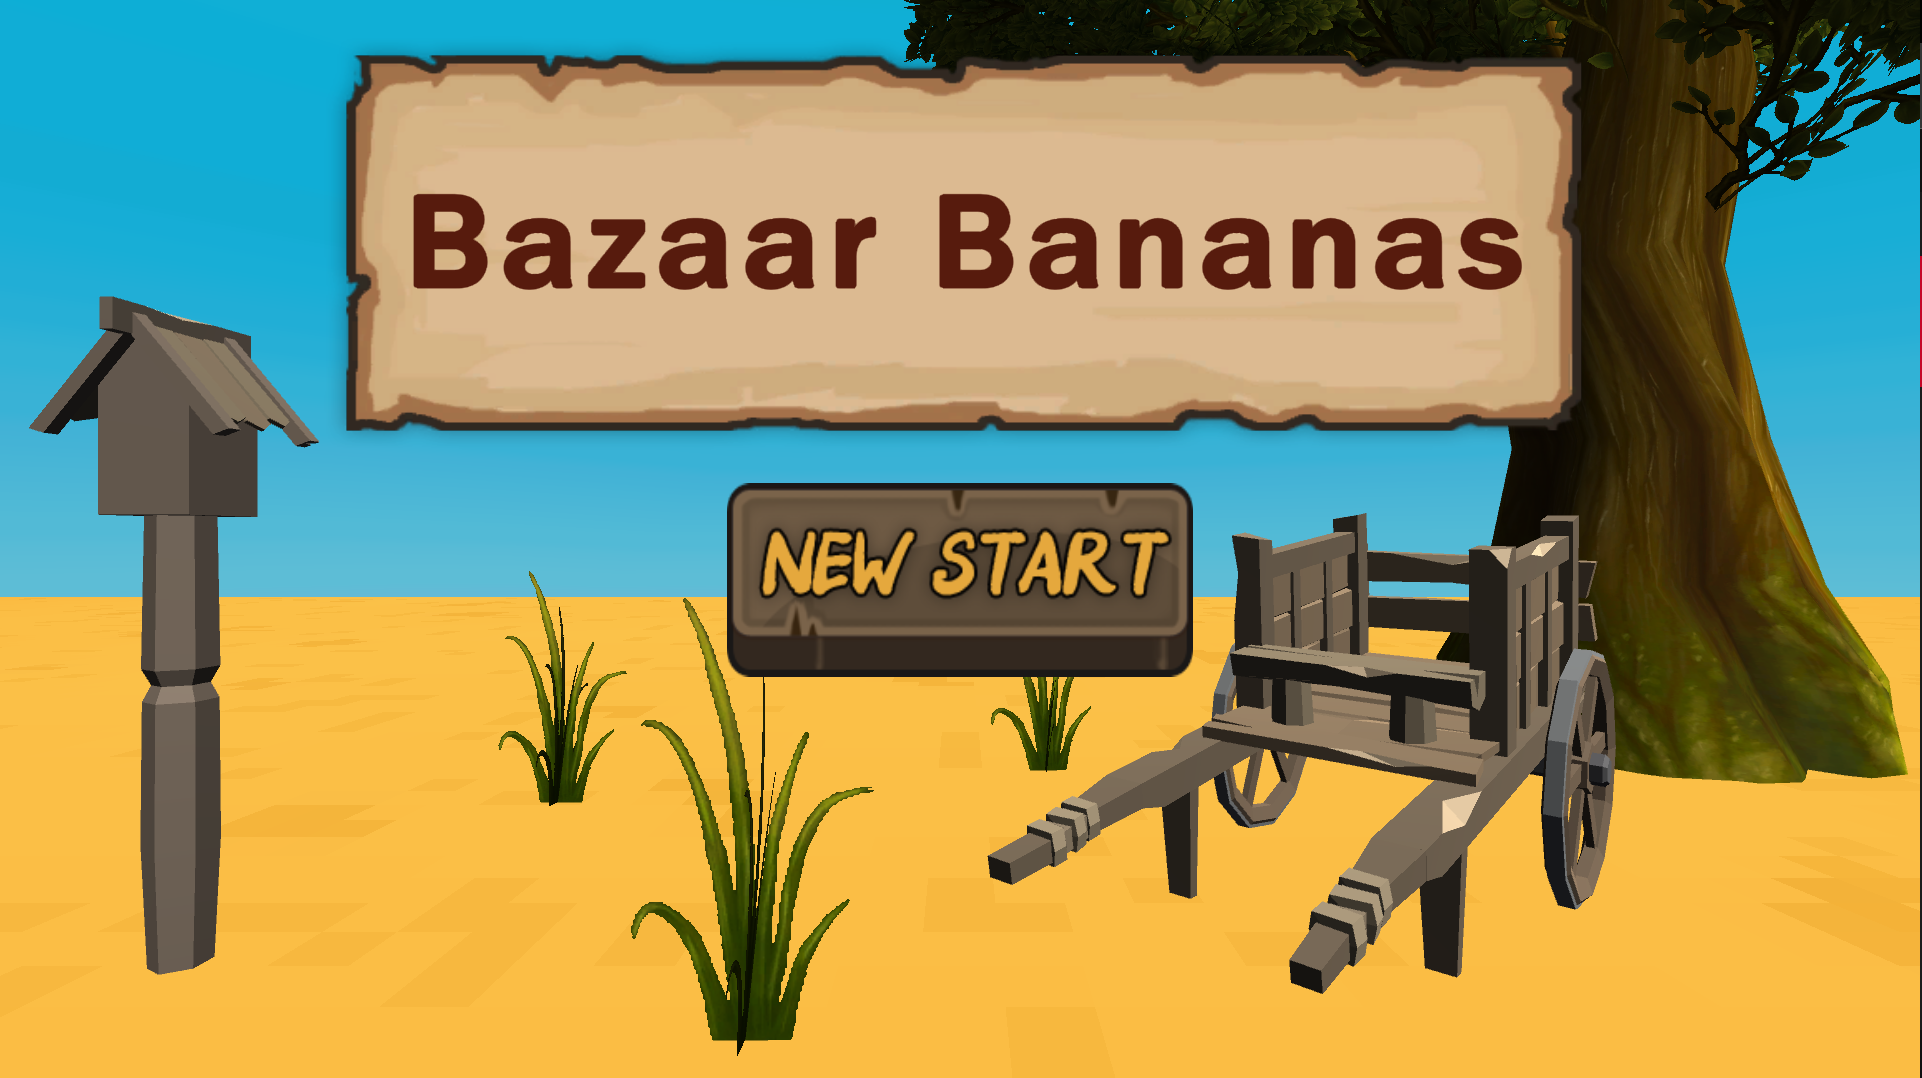 Bazaar Bananas